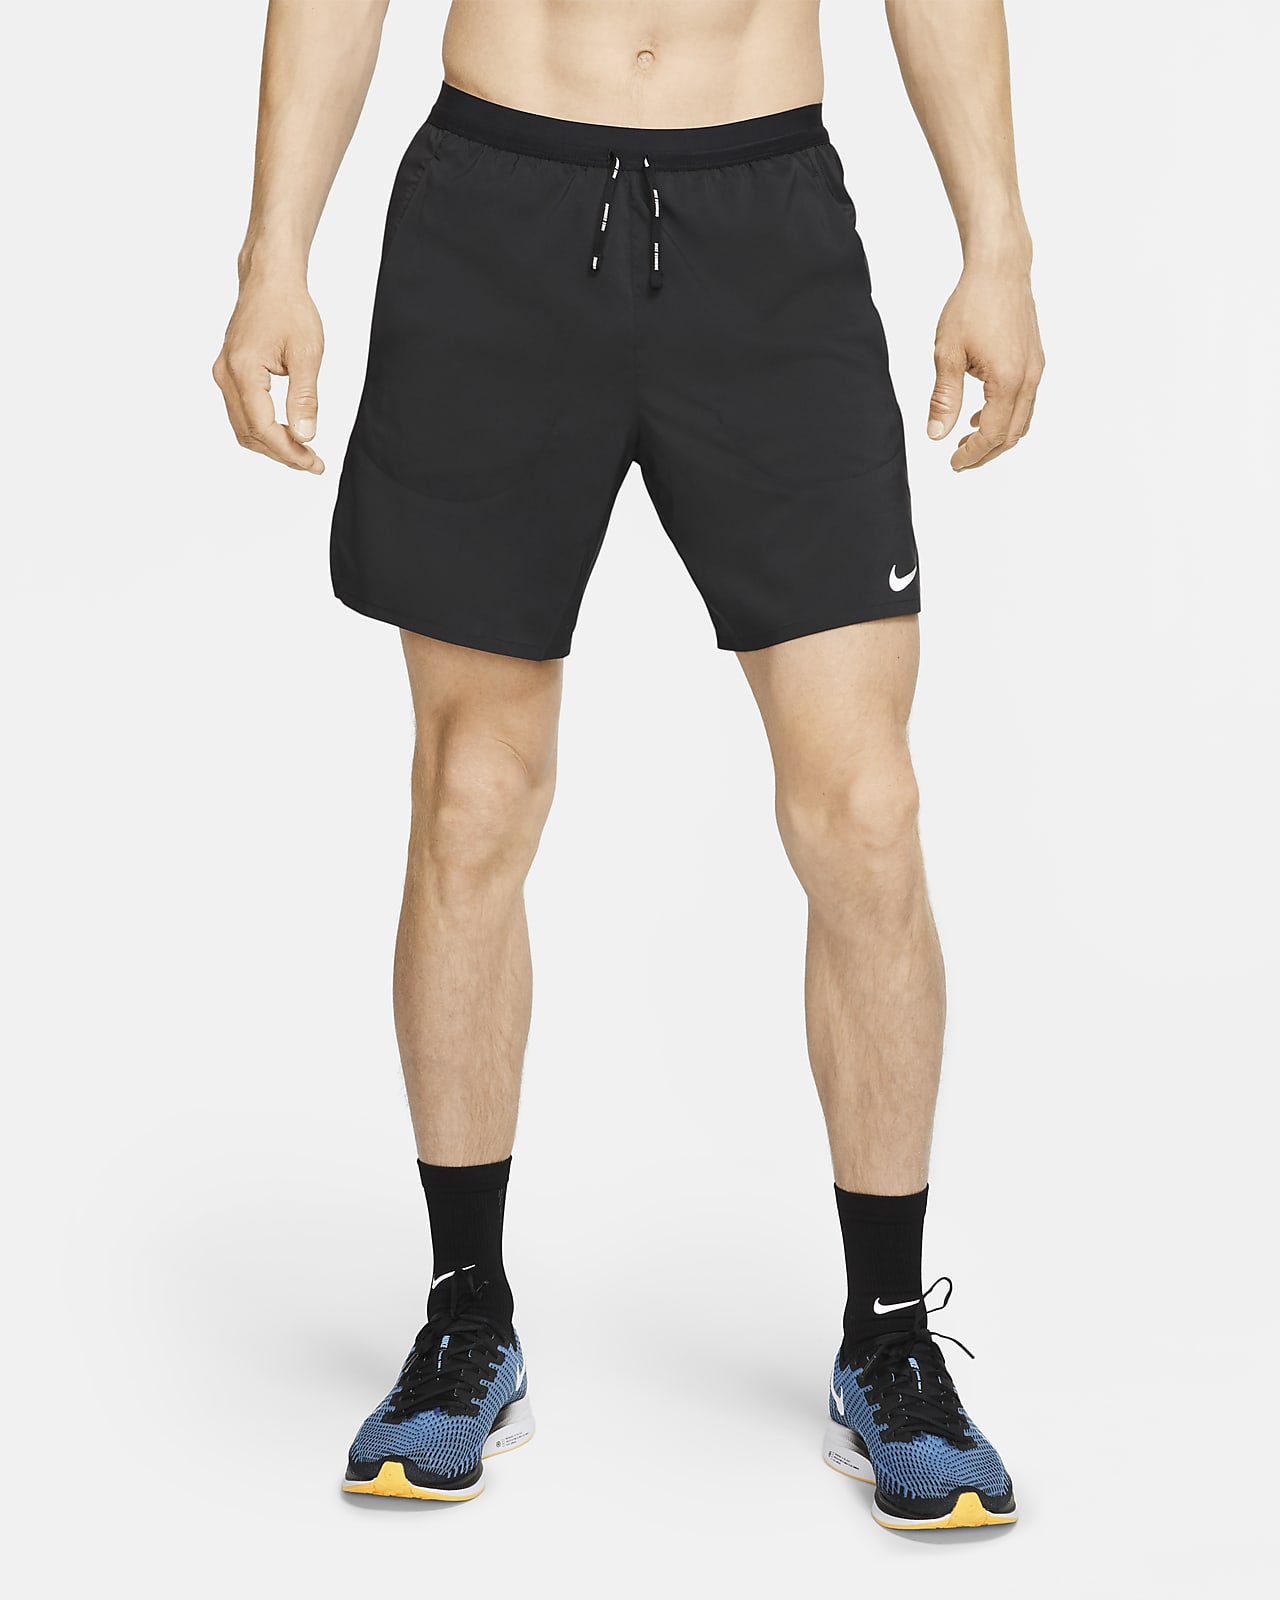 nike flex stride 2 in 1 running shorts mens